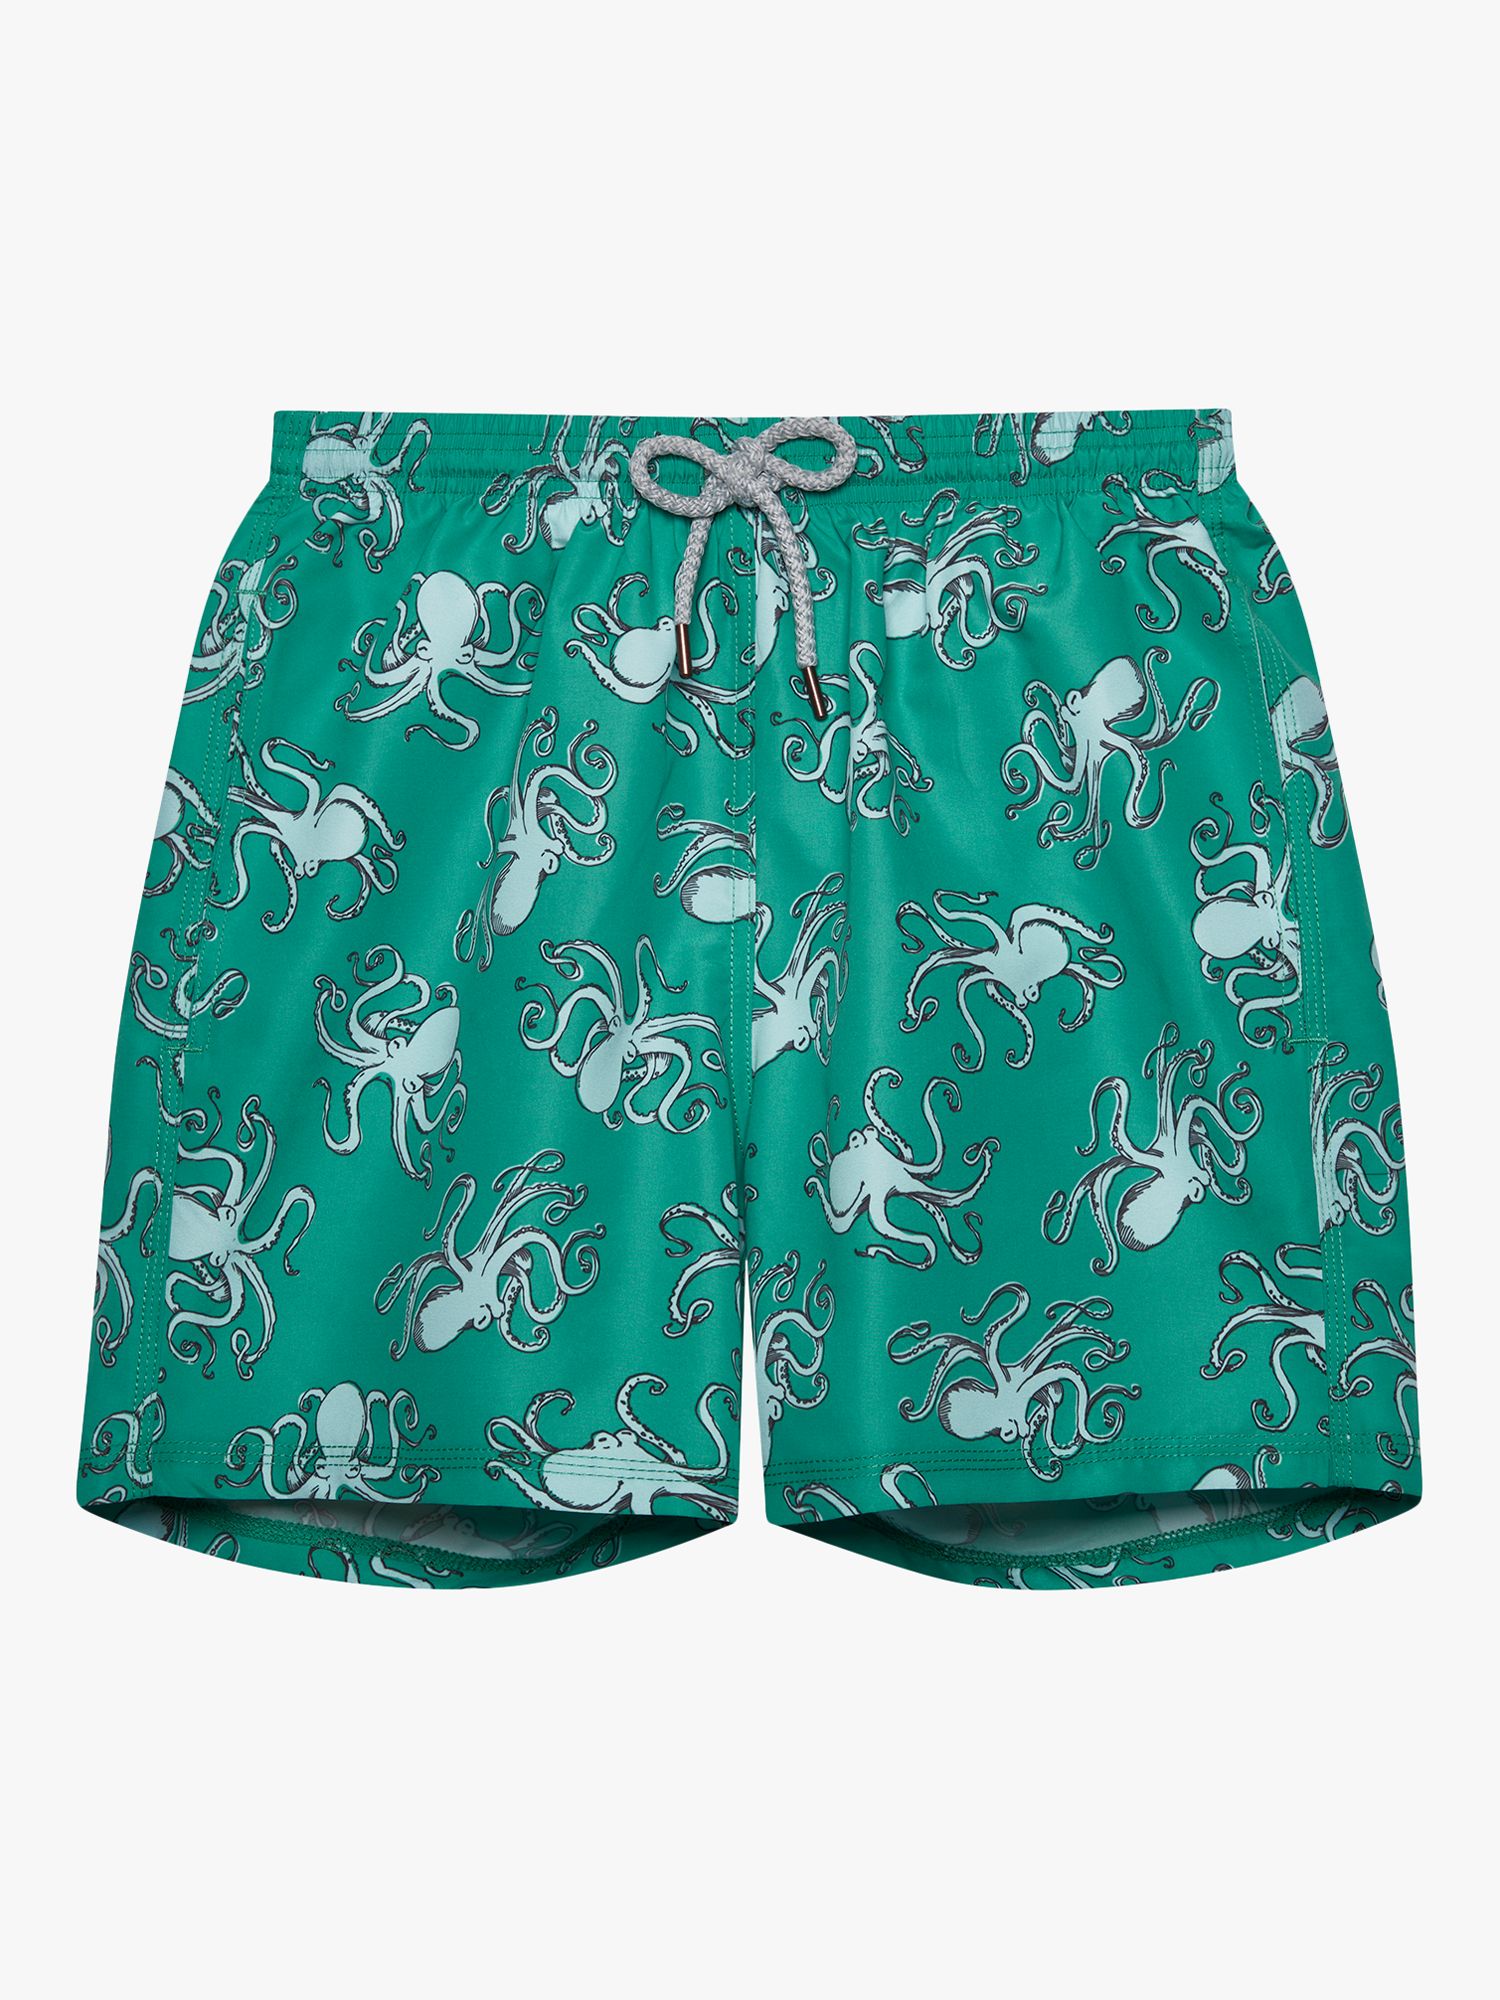 Trotters Octopus Swim Shorts, Green/Octopus, S